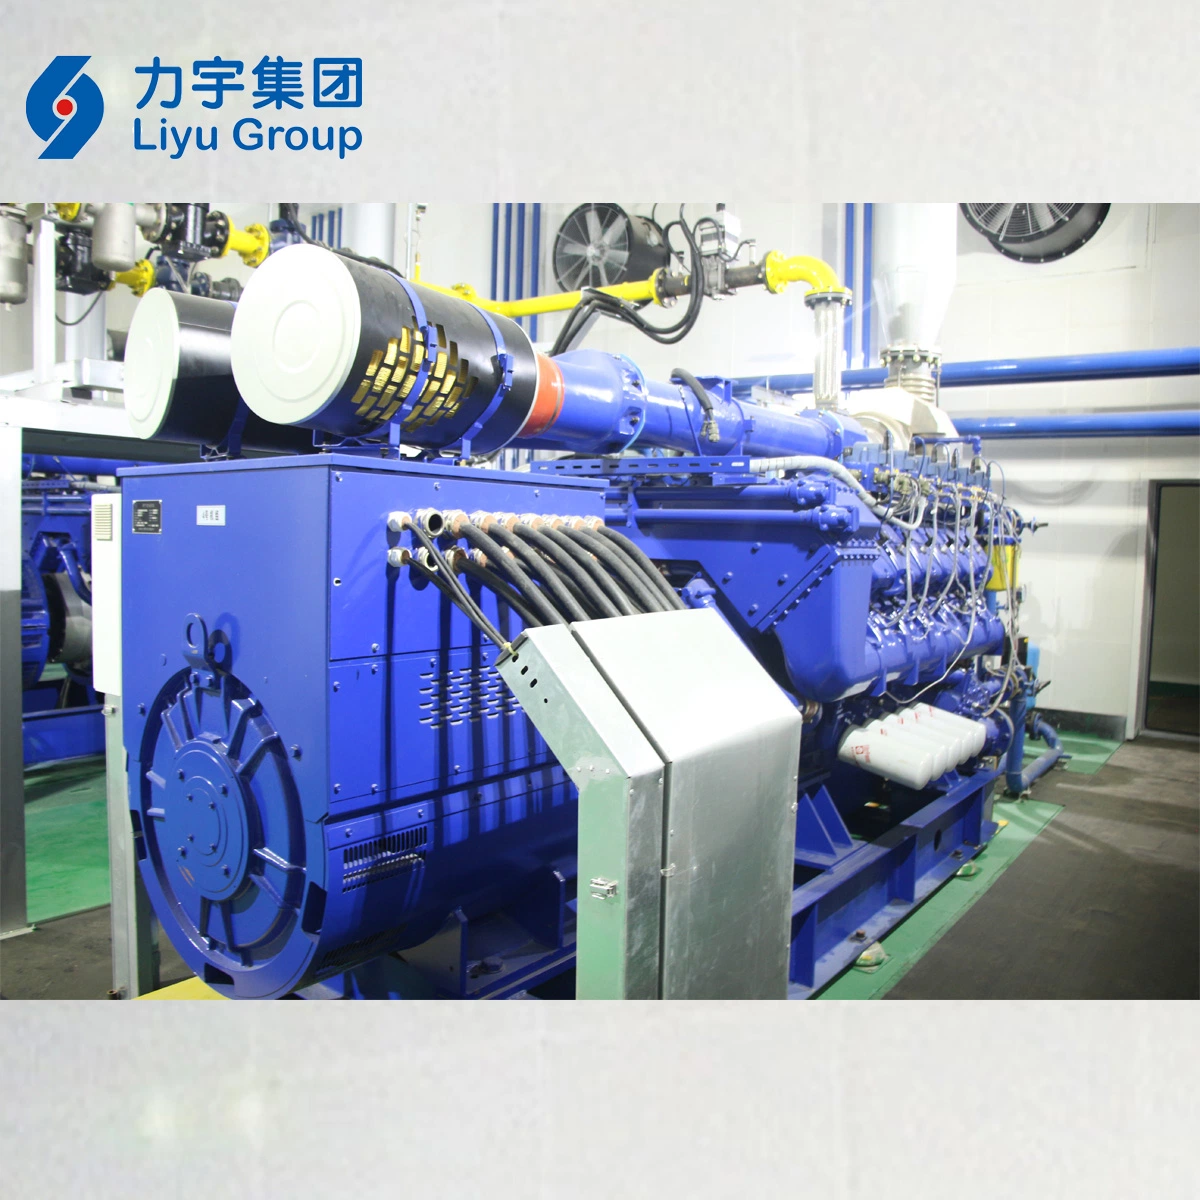 China Liyu 0.8MW/800kw LV Gas-Fired Internal Combustion Engine Energy Saving Biomass Gas Powerd Generation Set Manufacturer